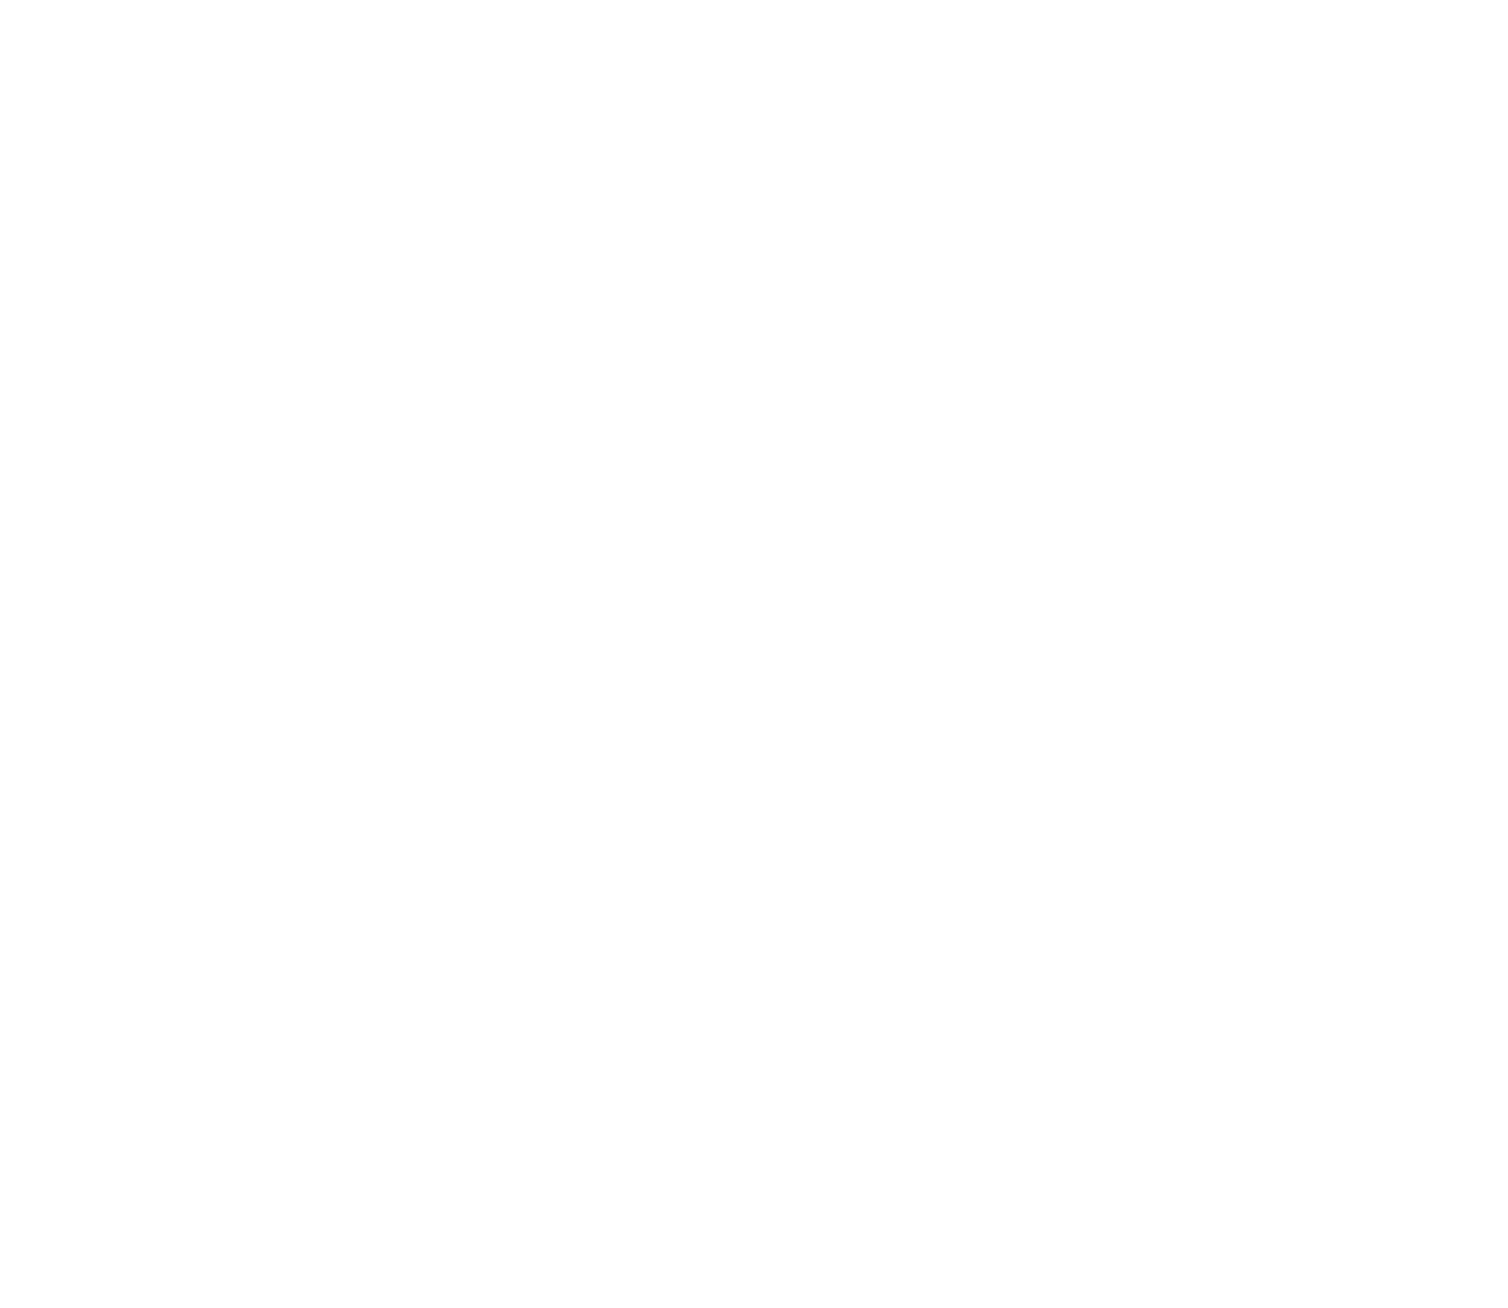 Vaalco Energy
 logo for dark backgrounds (transparent PNG)